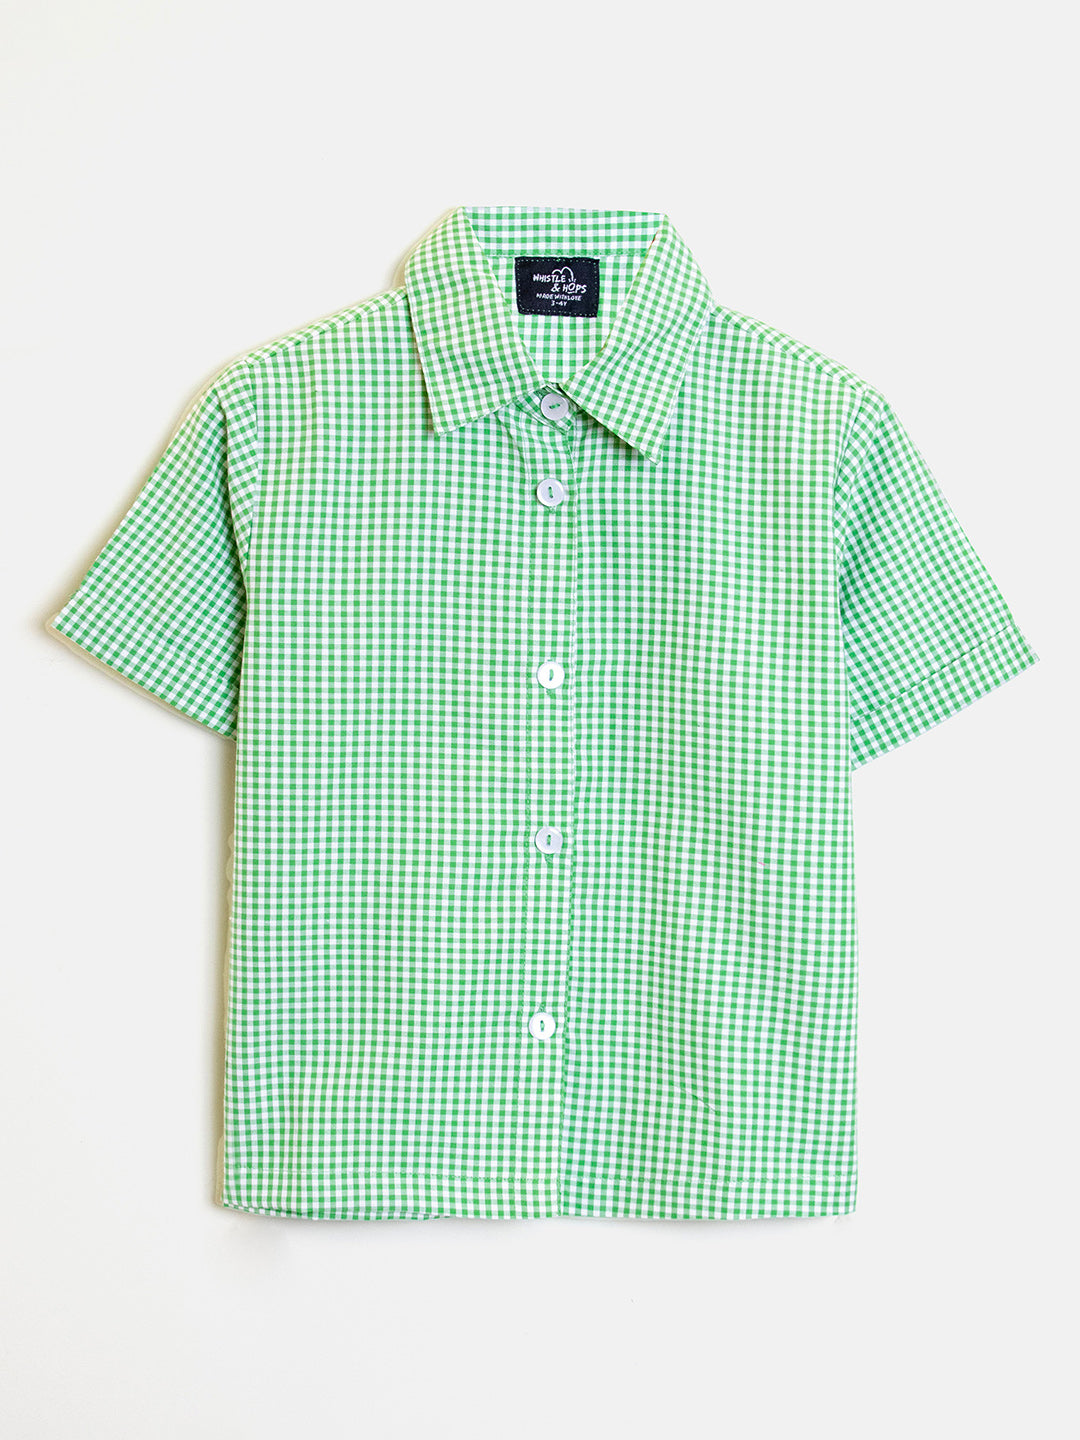 Boys Green Checks Cotton Shirt